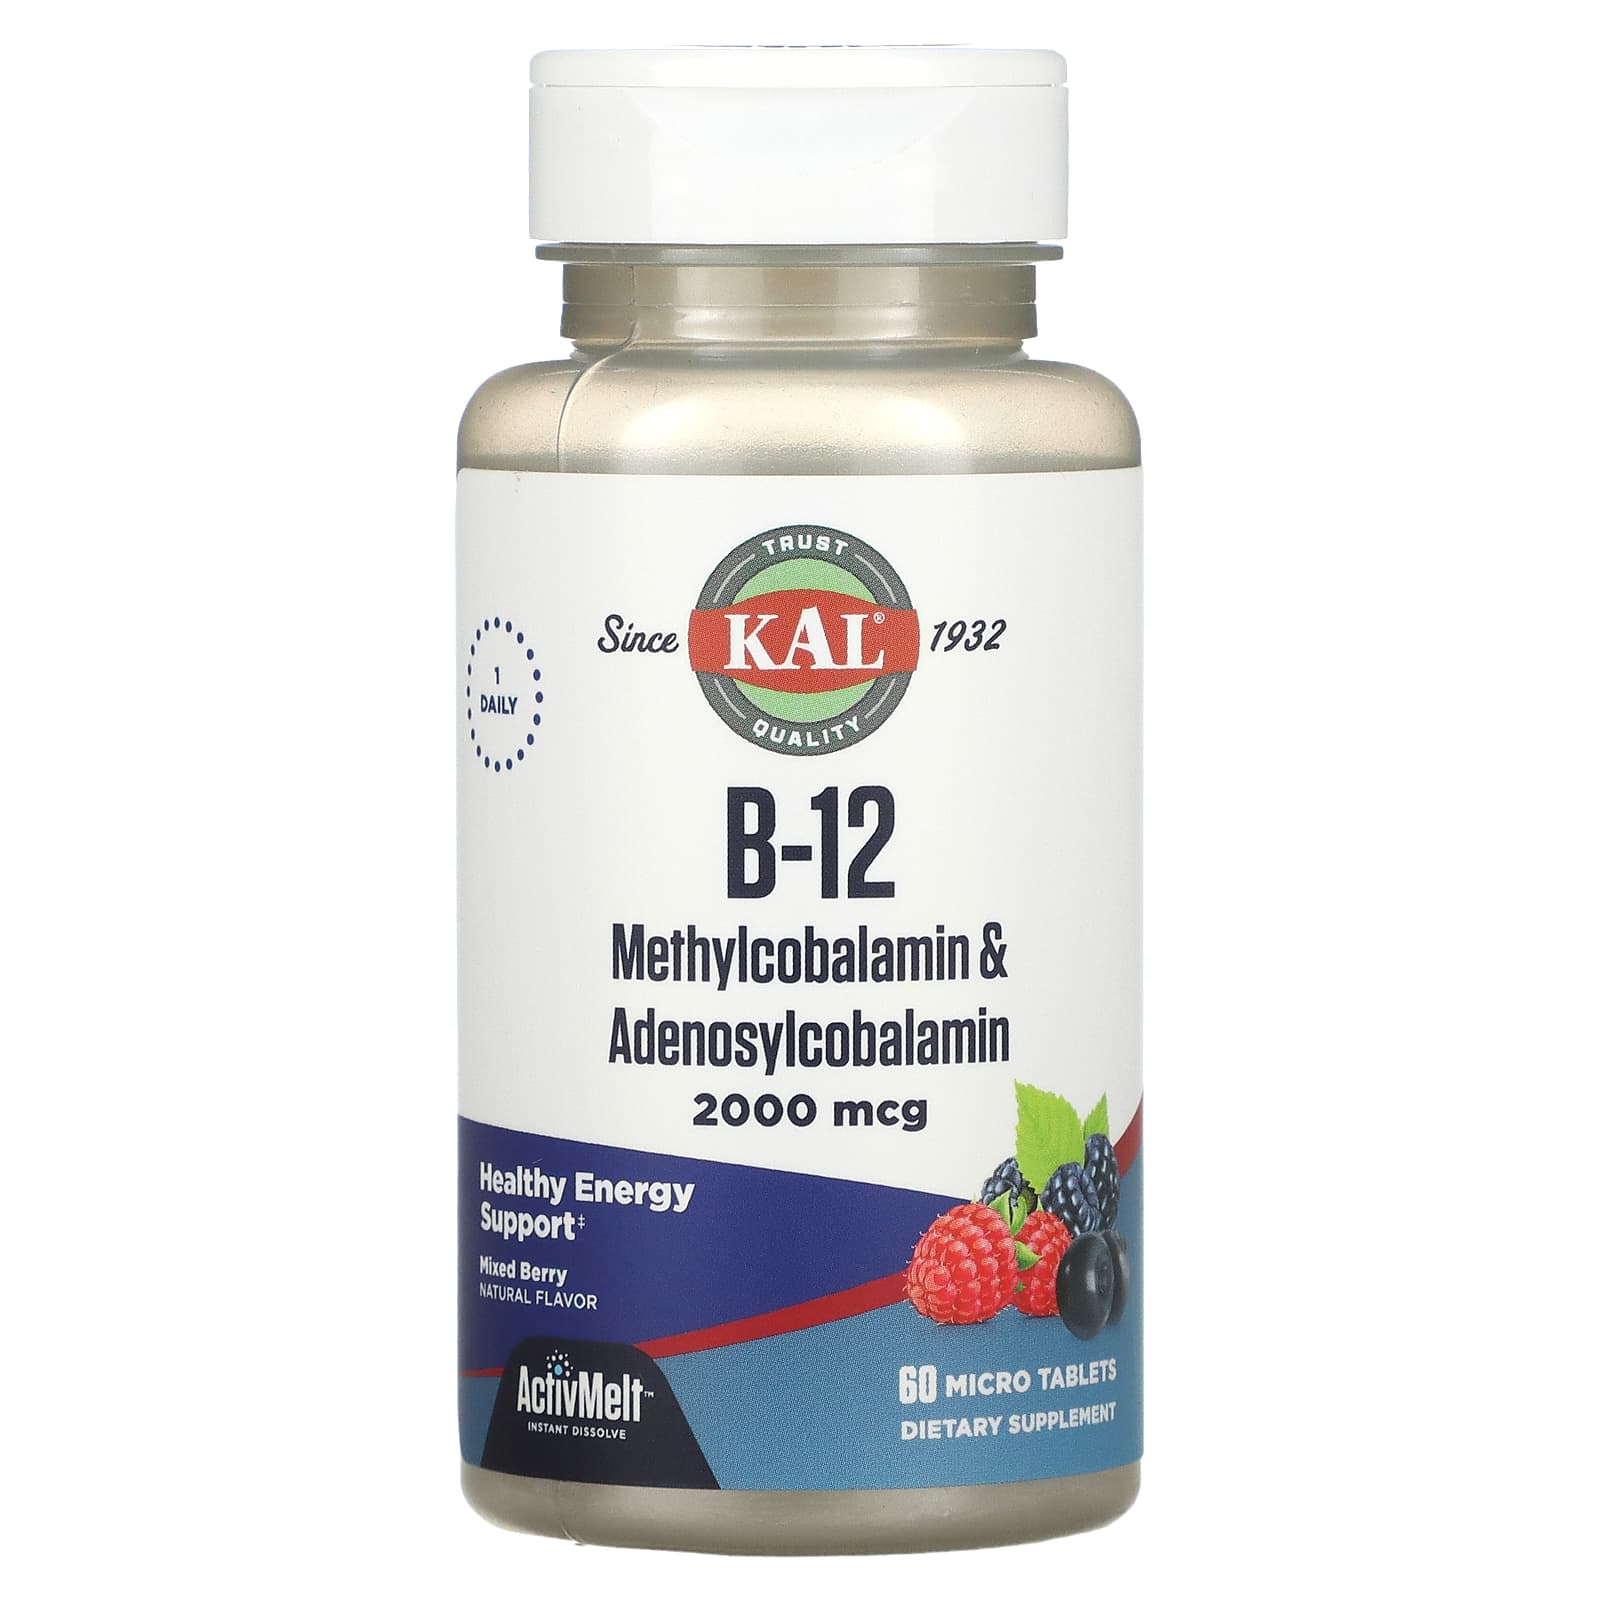 Kal B-12 Methylcobalamin Adenosyl ActivMelt, Mixed Berry, 2000 Mcg, 60 Micro Tablets